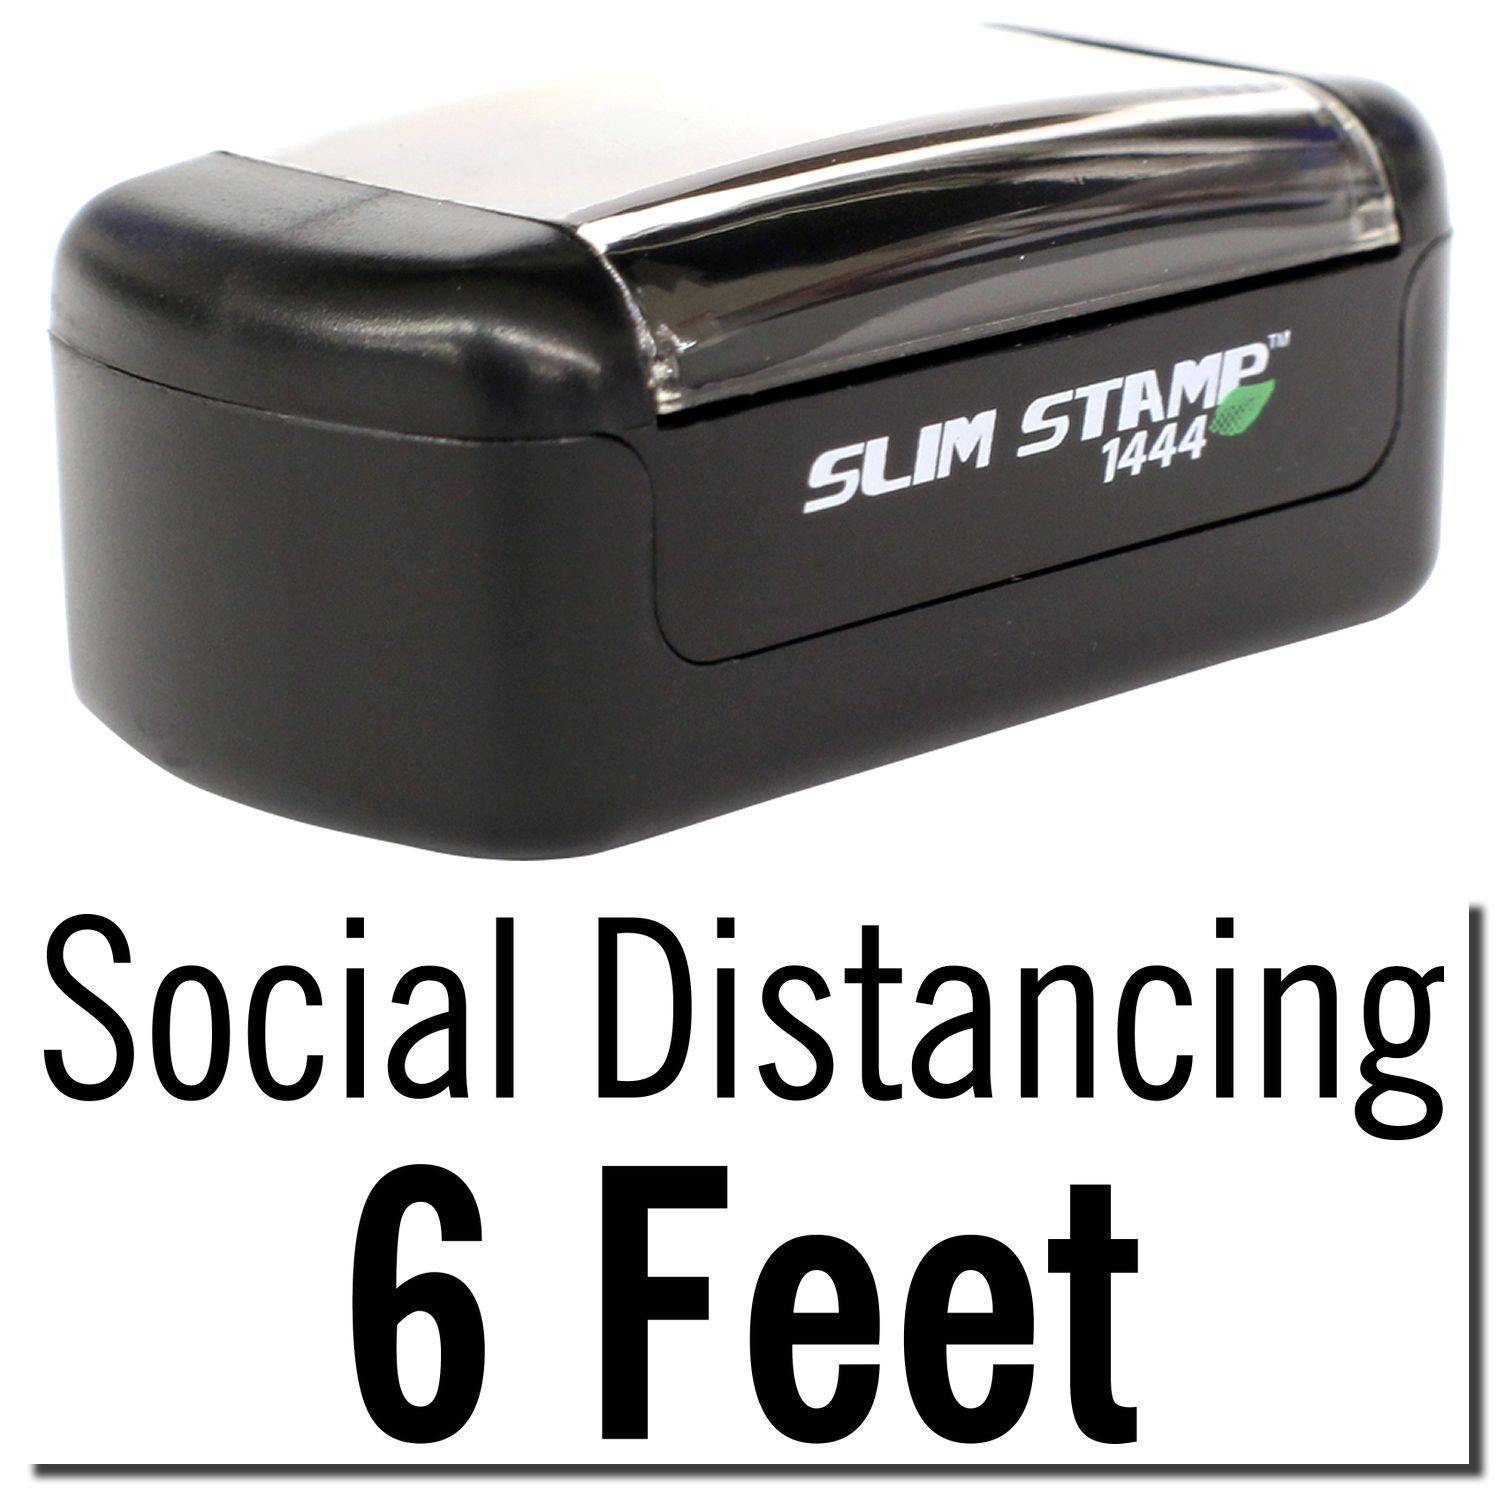 Slim Pre-Inked Social Distancing 6 Feet Stamp Main Image